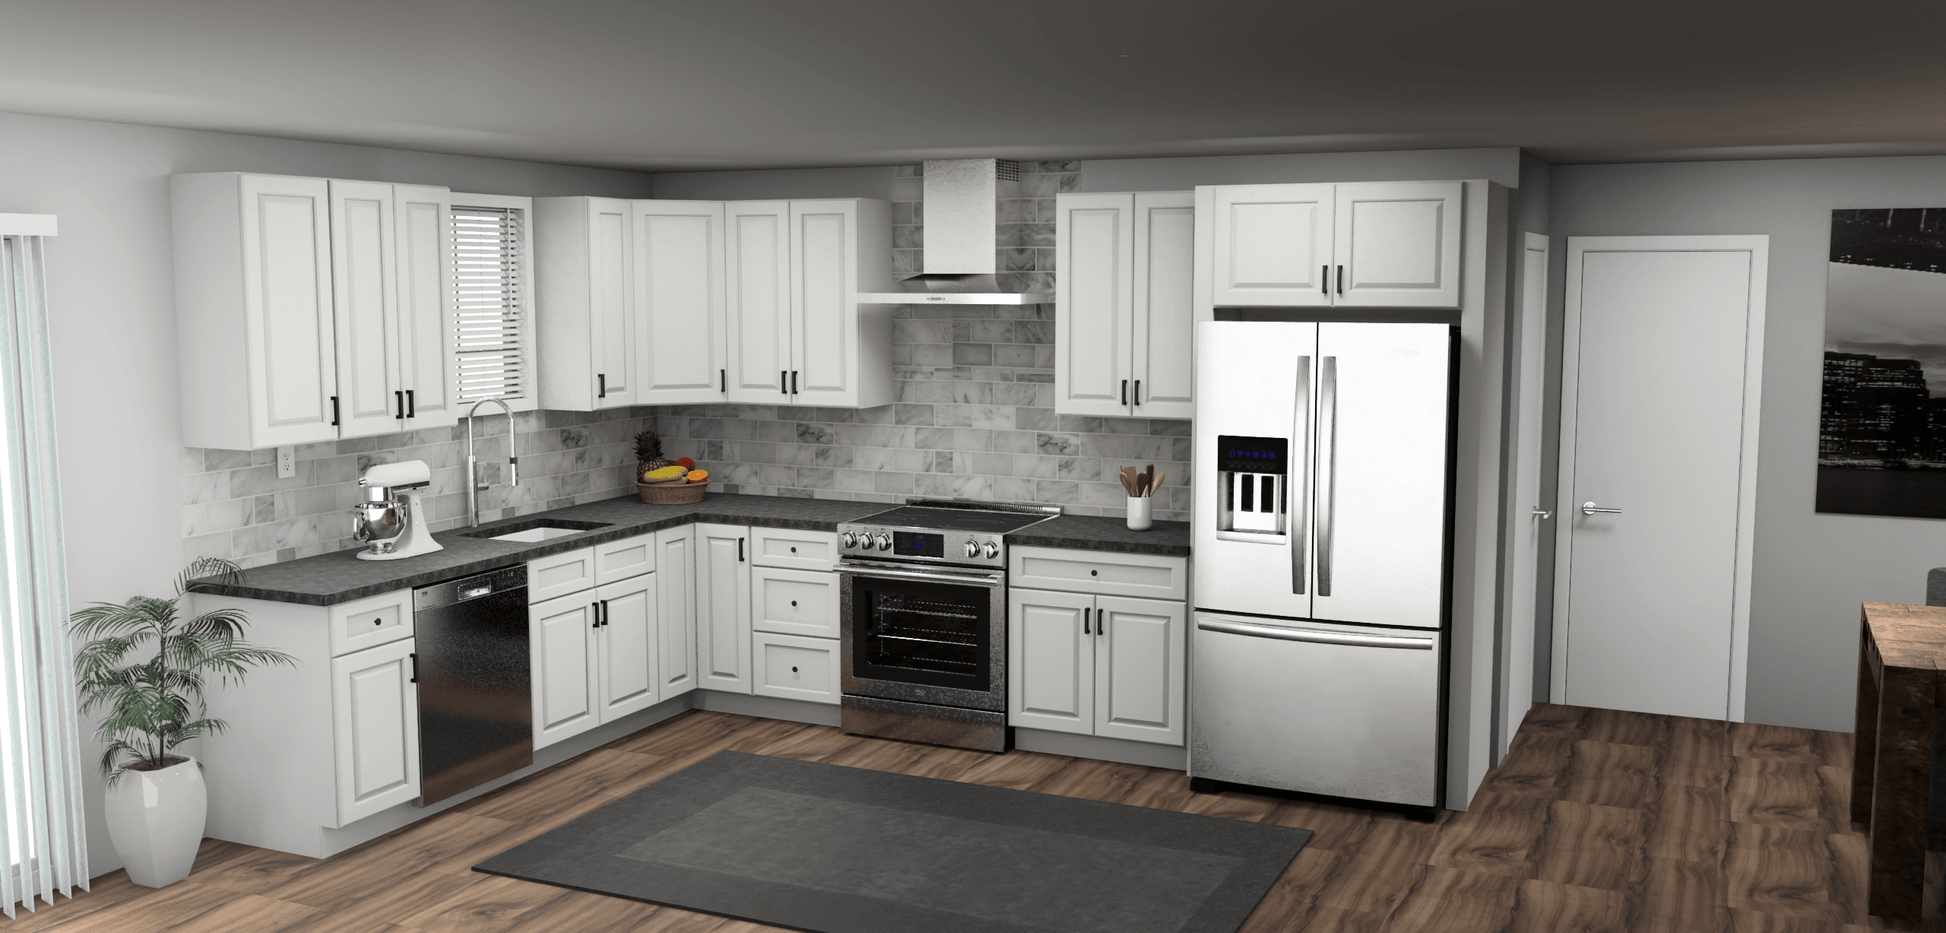 Fabuwood Value Premium Hallmark Frost 9 x 13 L Shaped Kitchen | Cabinets